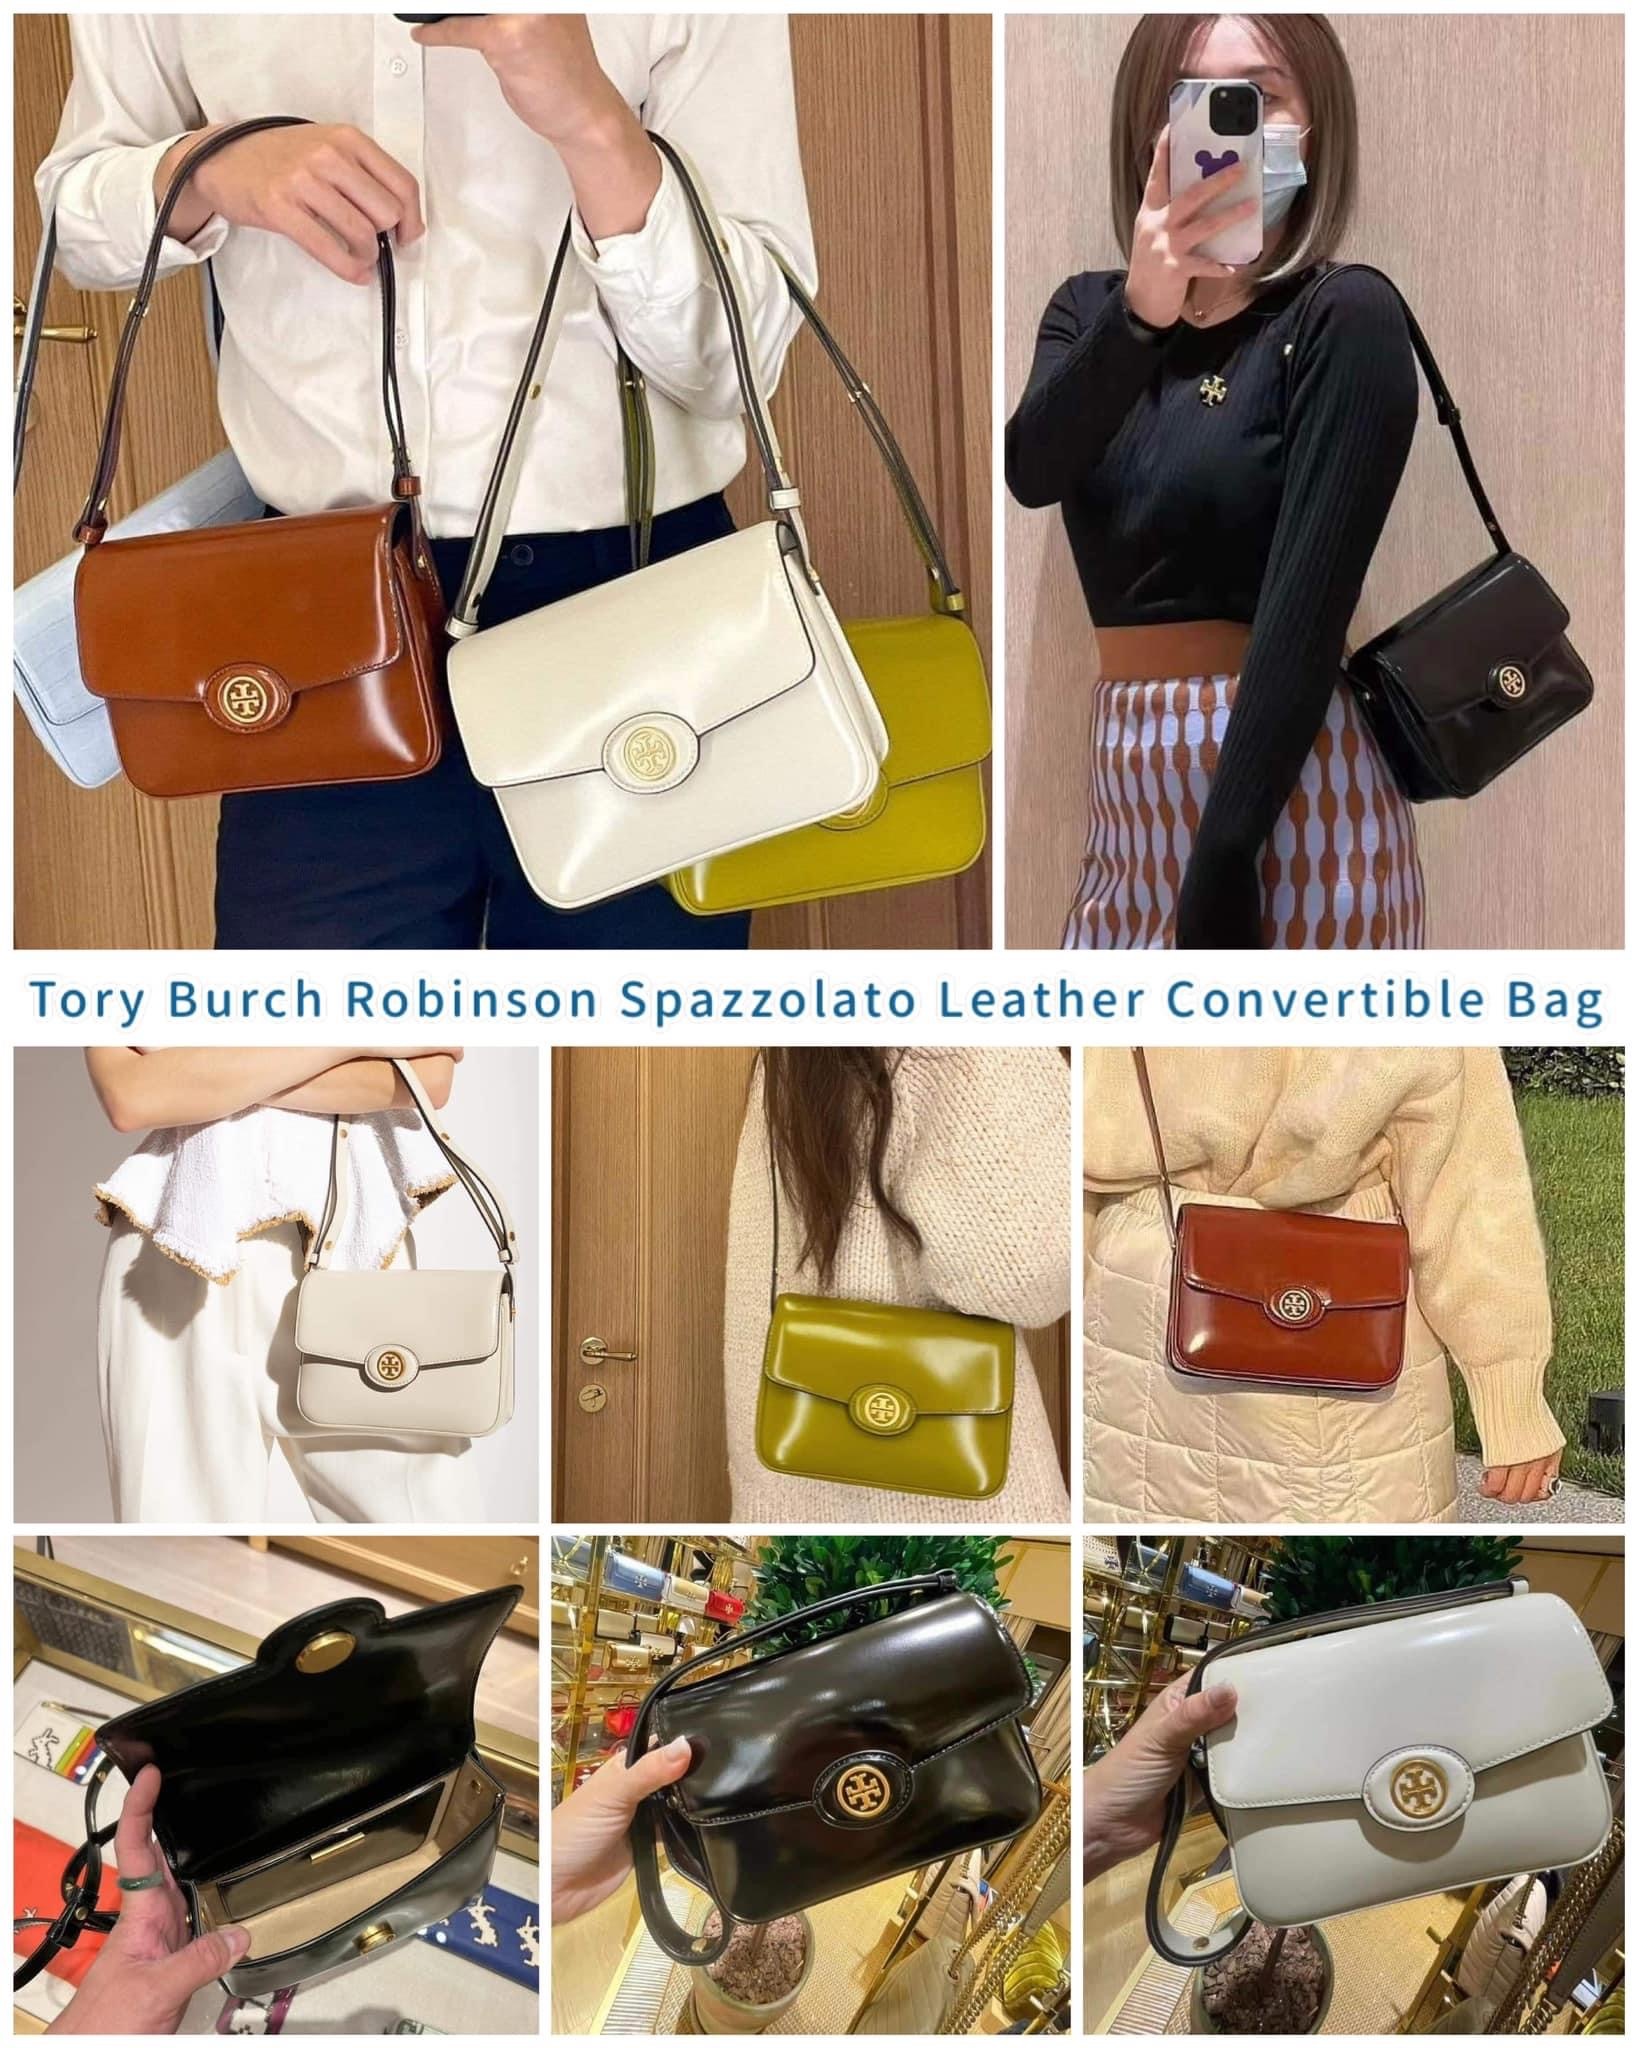 Tory Burch Robinson Spazzolato Convertible Shoulder Bag